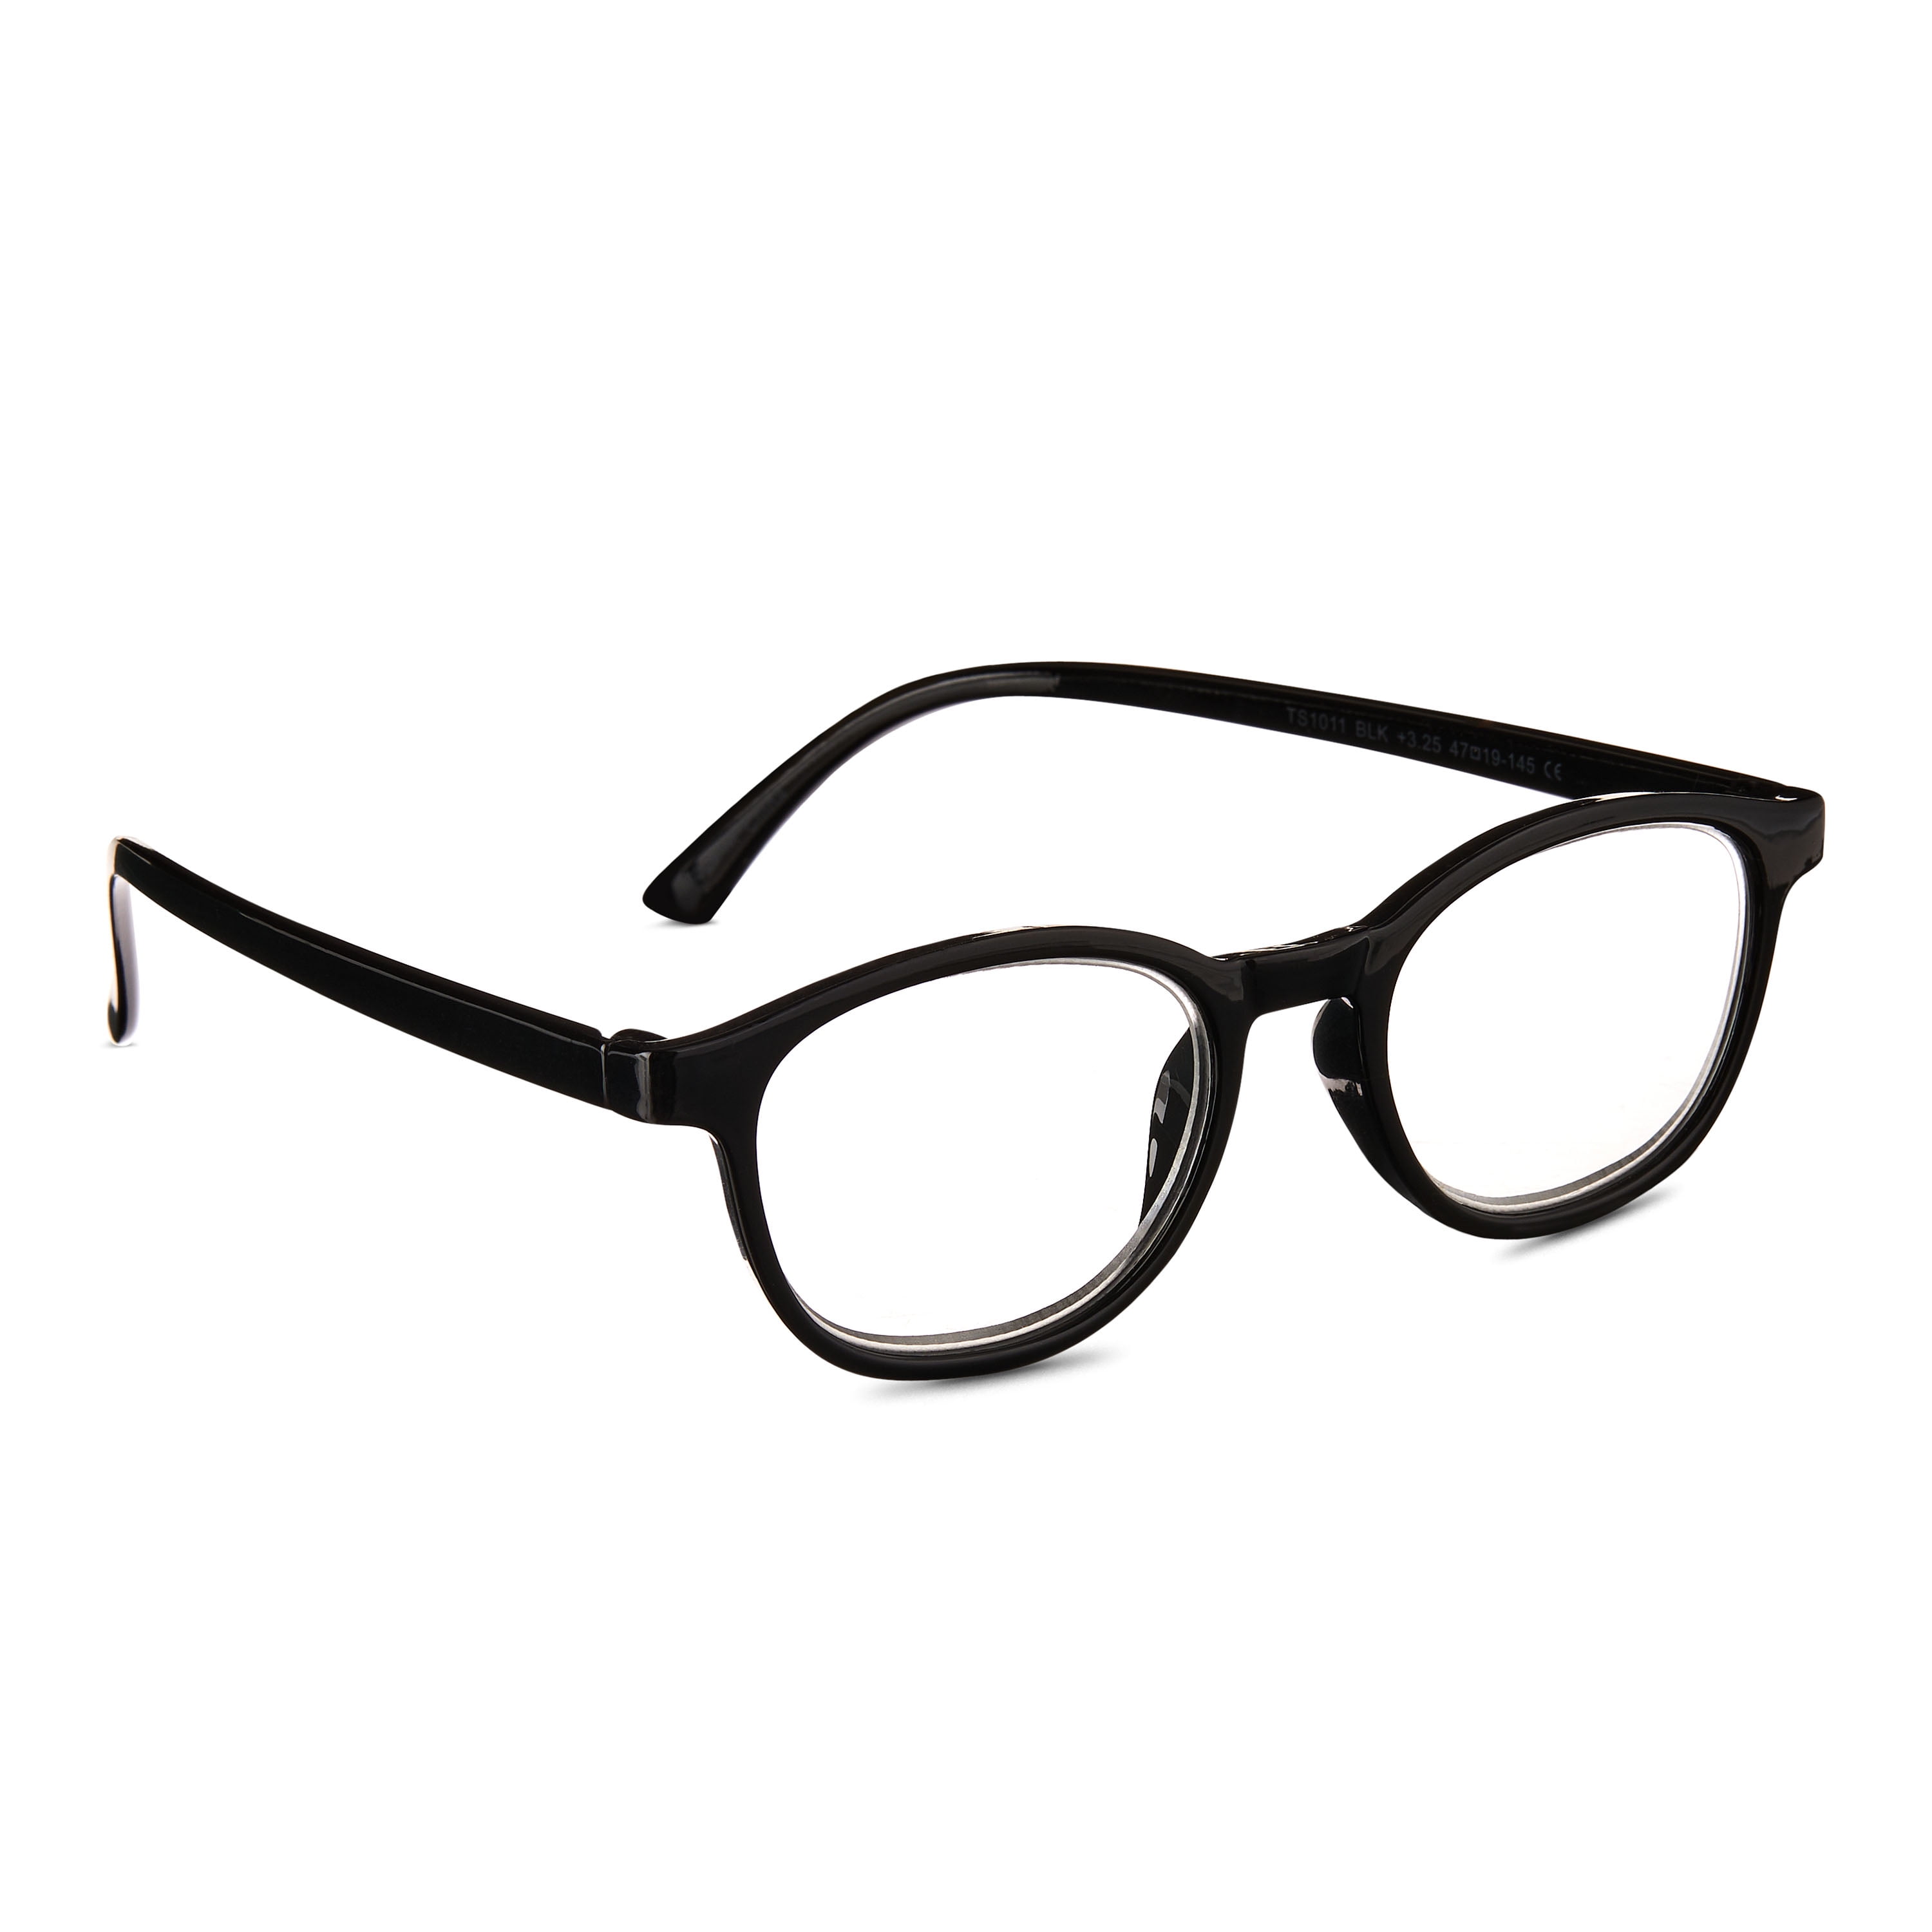 Equate Reading Glasses, Black/Wine/Tortoise, +3.25, 3 Pairs 